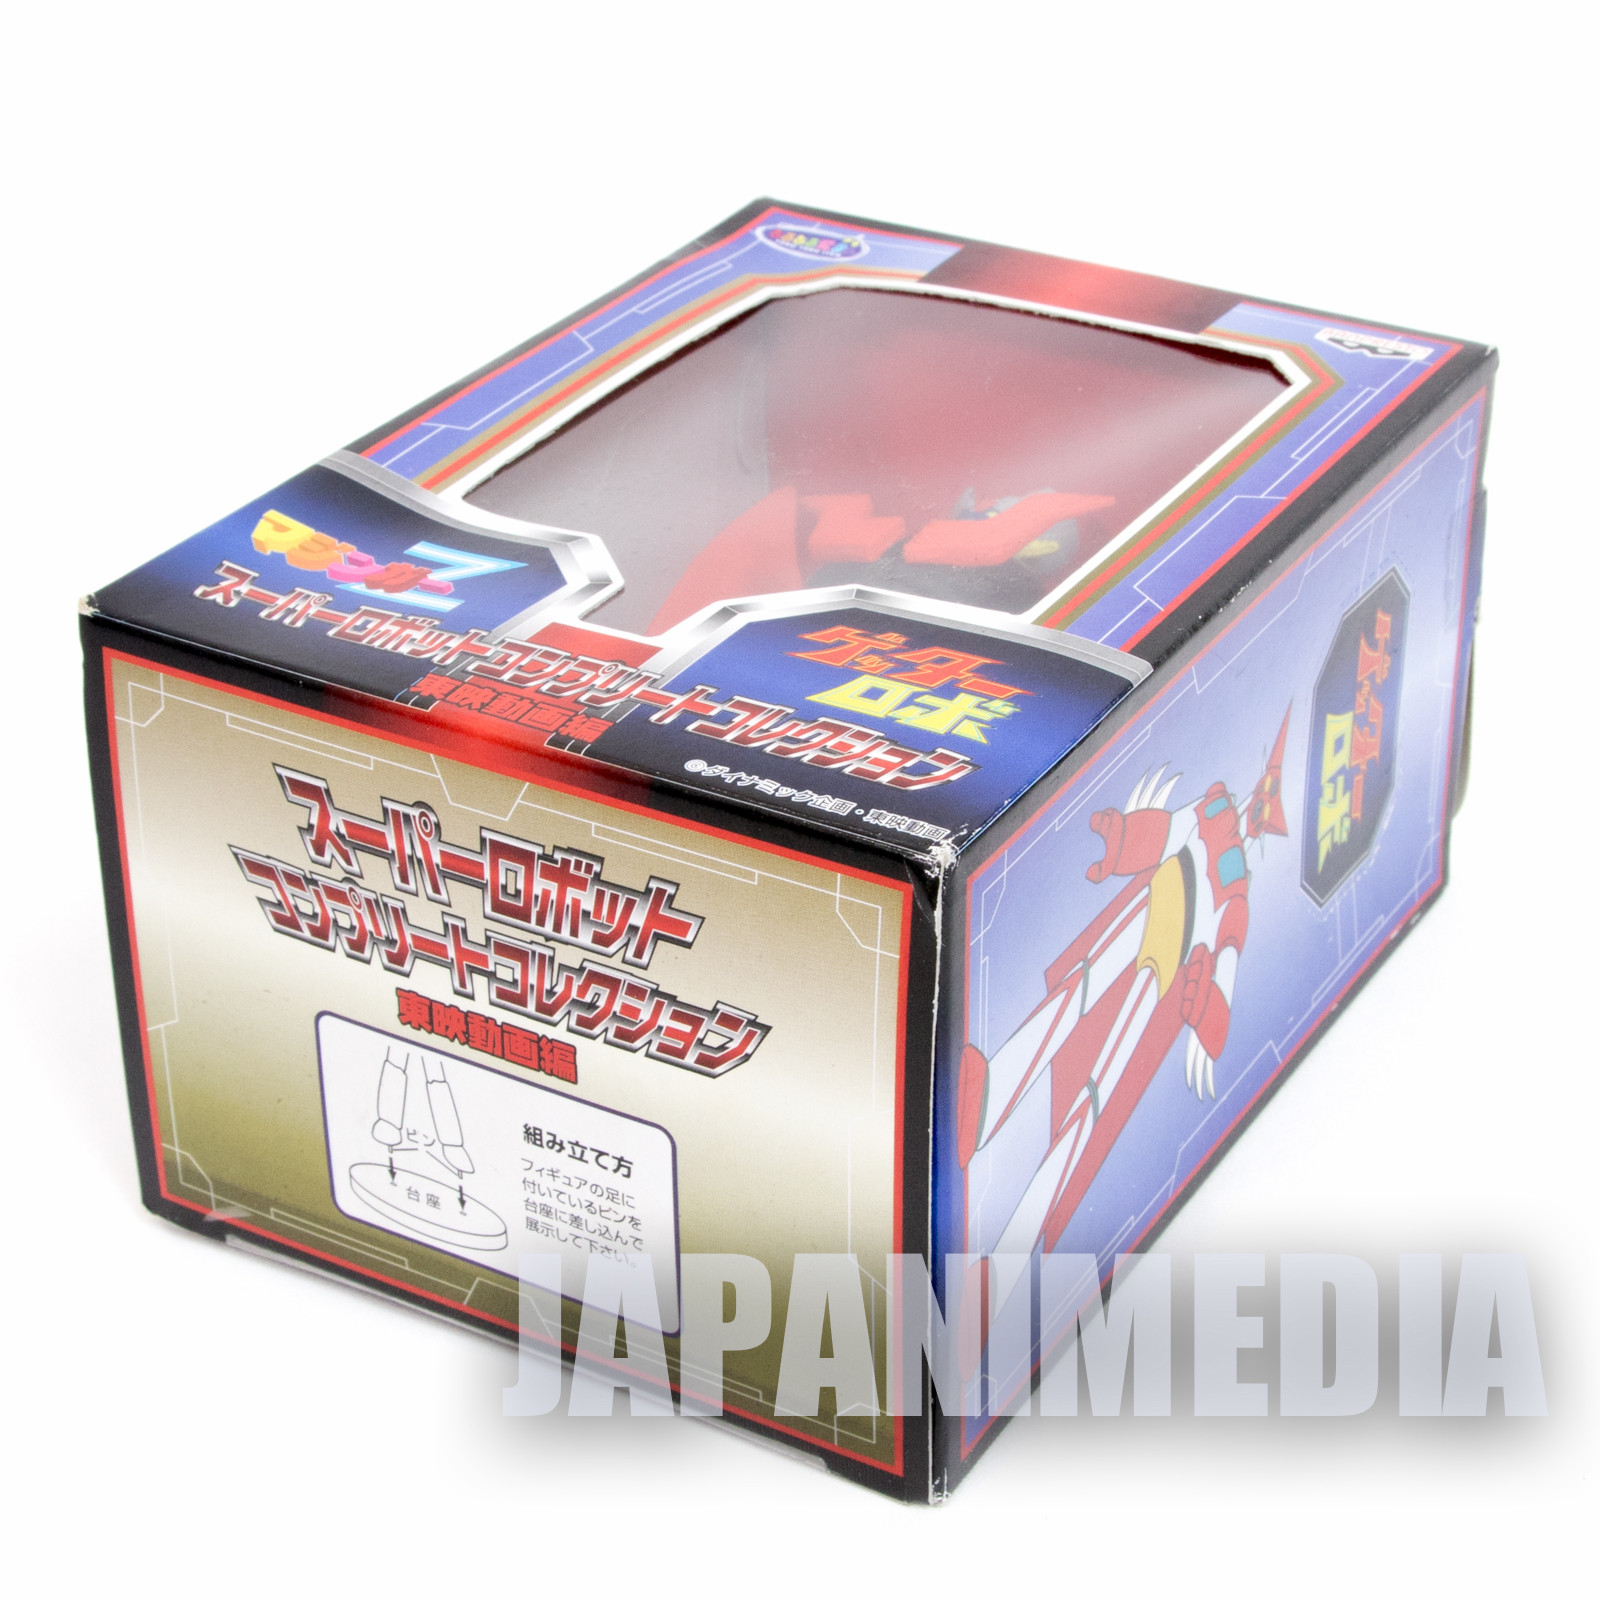 Mazinger Z Figure Super Robot Collection Banpresto JAPAN ANIME 2